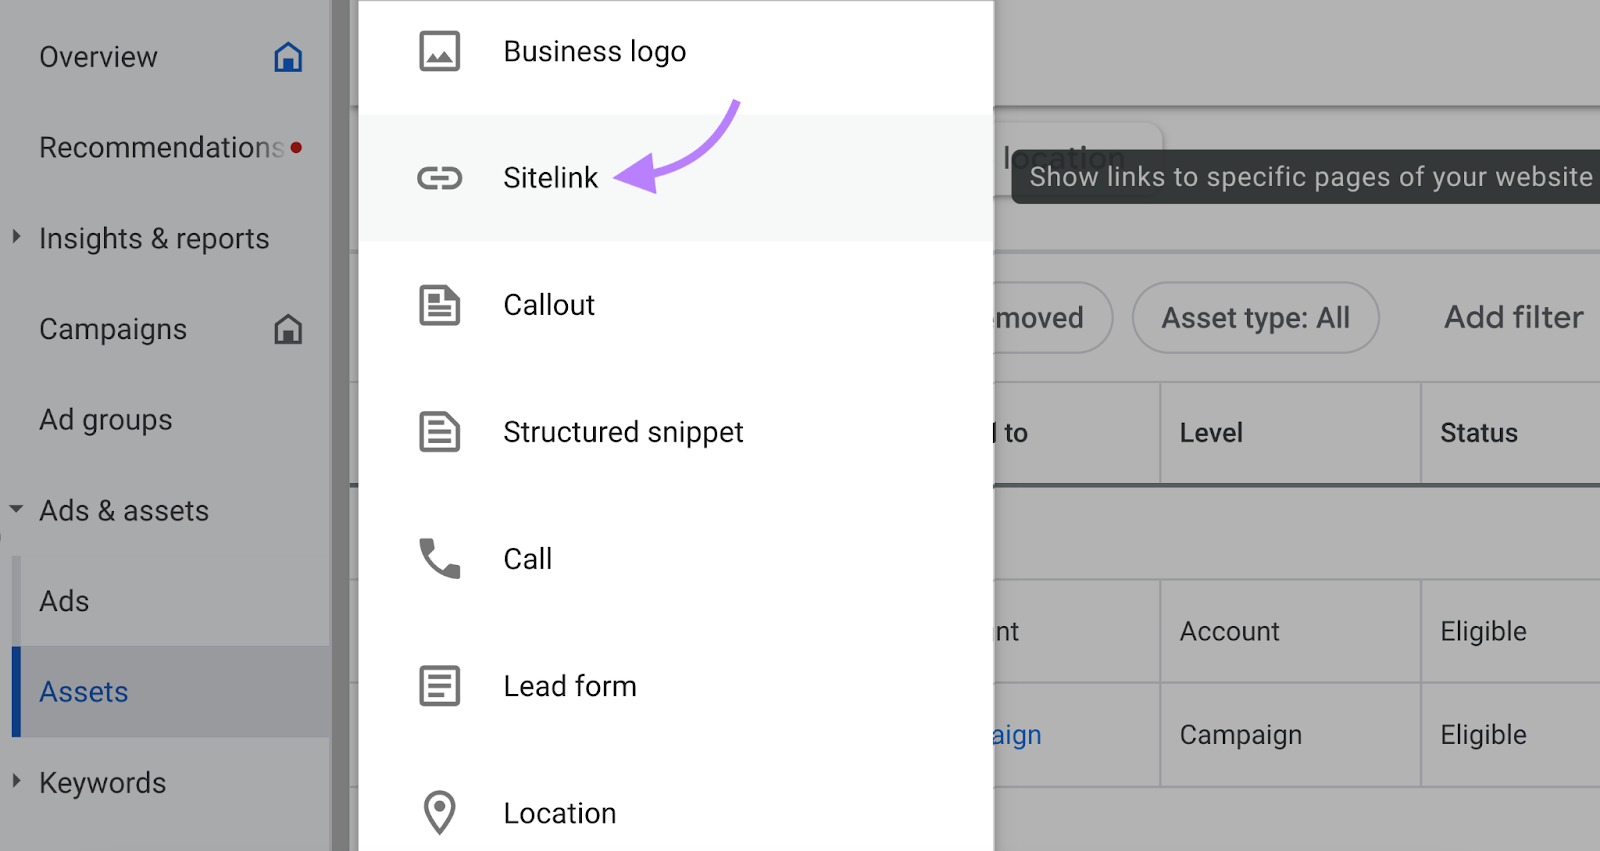 navigation to "Sitelink" button